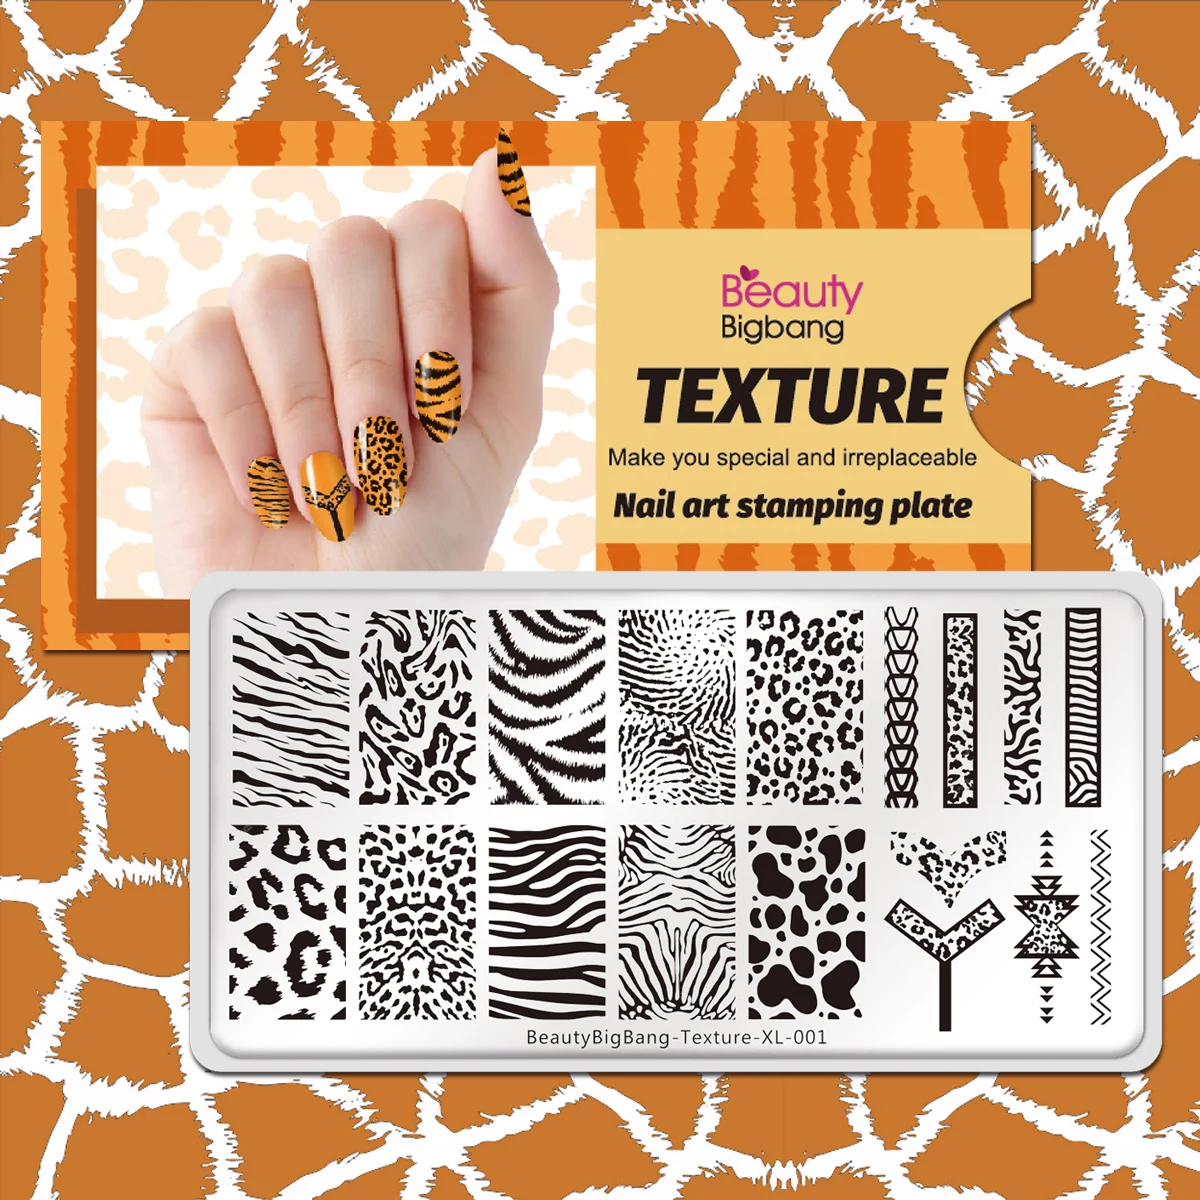 

BeautyBigBang Animals Nail Art Templates Stamping Plate Tiger Zebra Leopard Print Animal Image Stencil Nail Art Template Texture